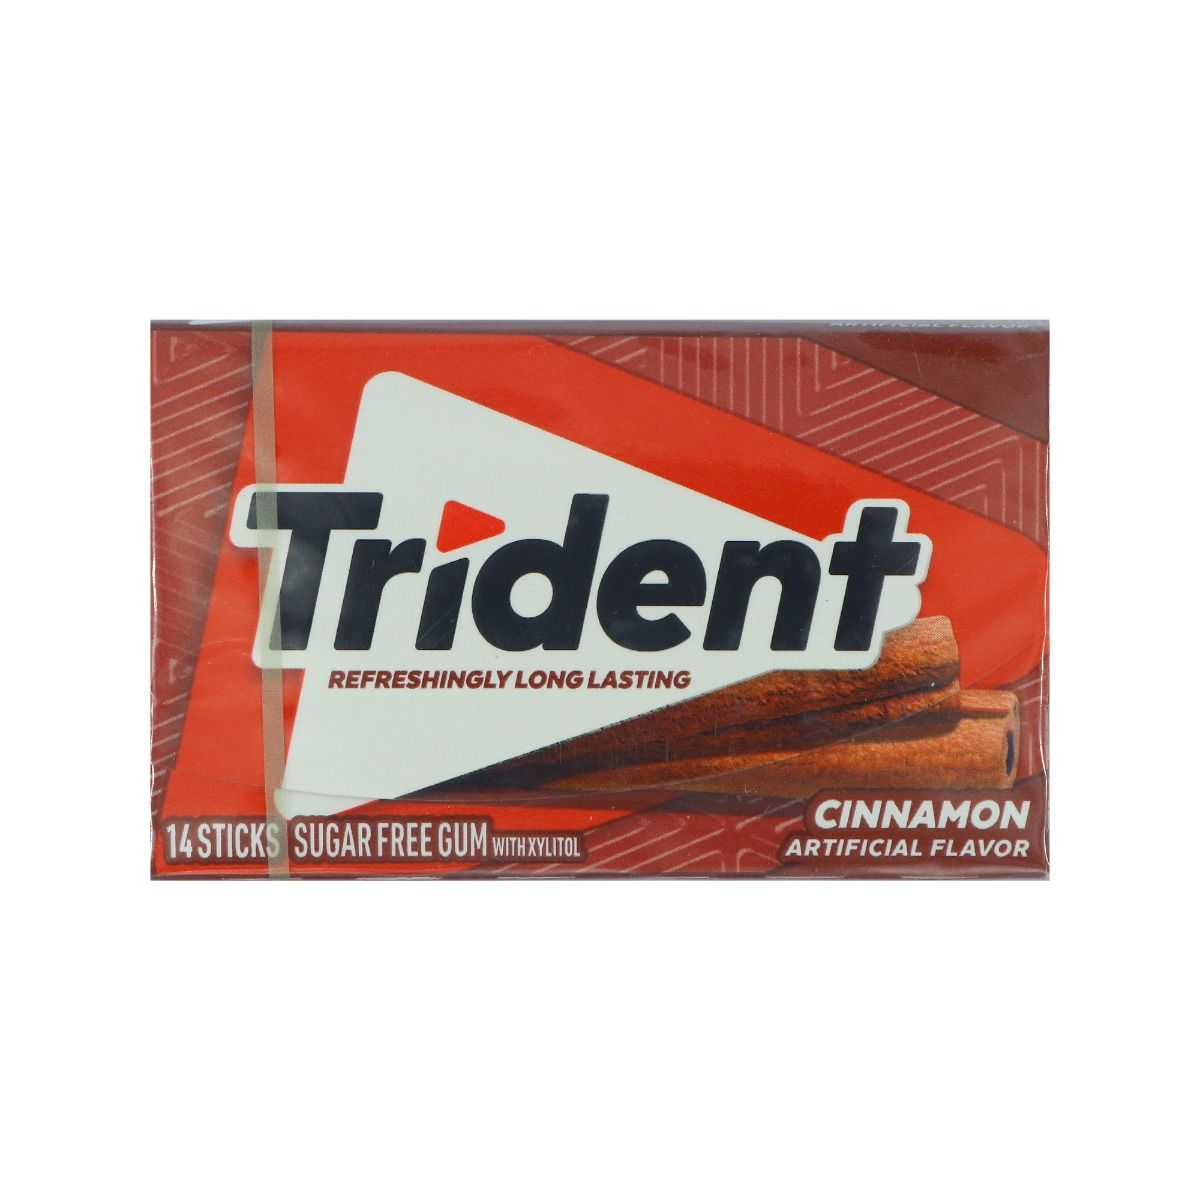 Trident Sugar Free Gum Cinnamon 14 Stick, Pack of 1 